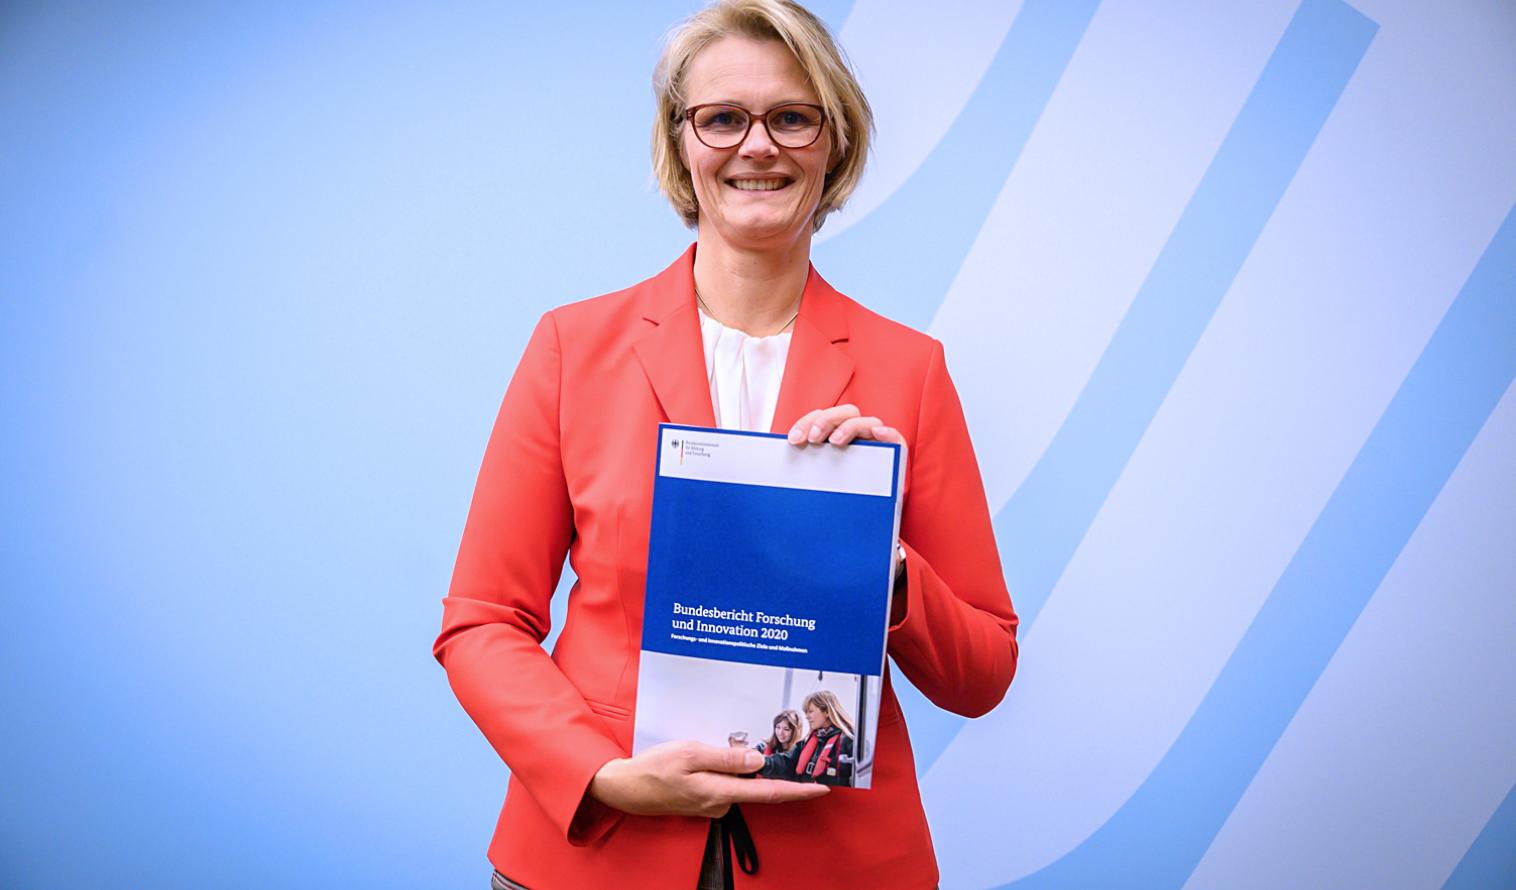 Bundesministerin Anja Karliczek präsentiert den neuen Bundesbericht Forschung und Innovation